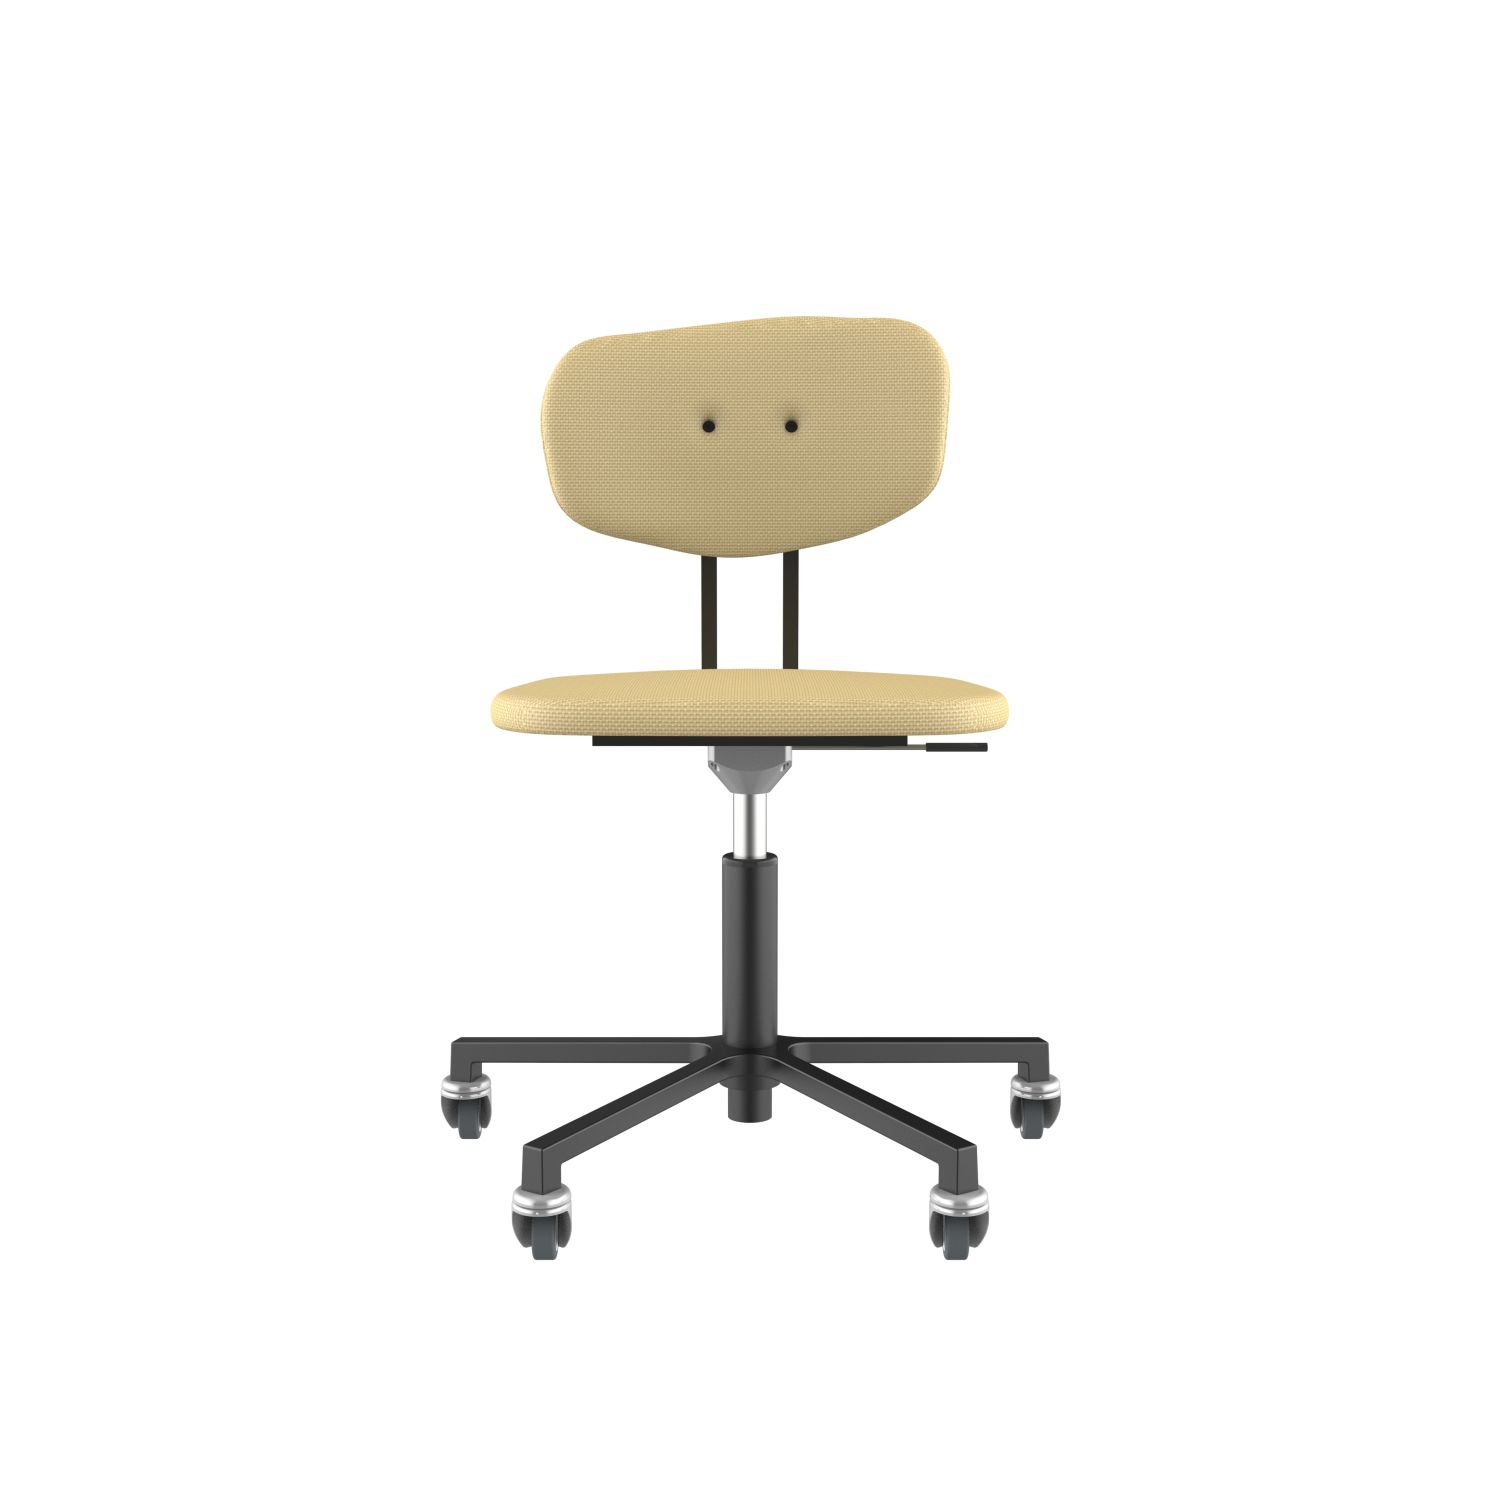 lensvelt maarten baas office chair without armrests backrest c light brown 141 black ral9005 soft wheels